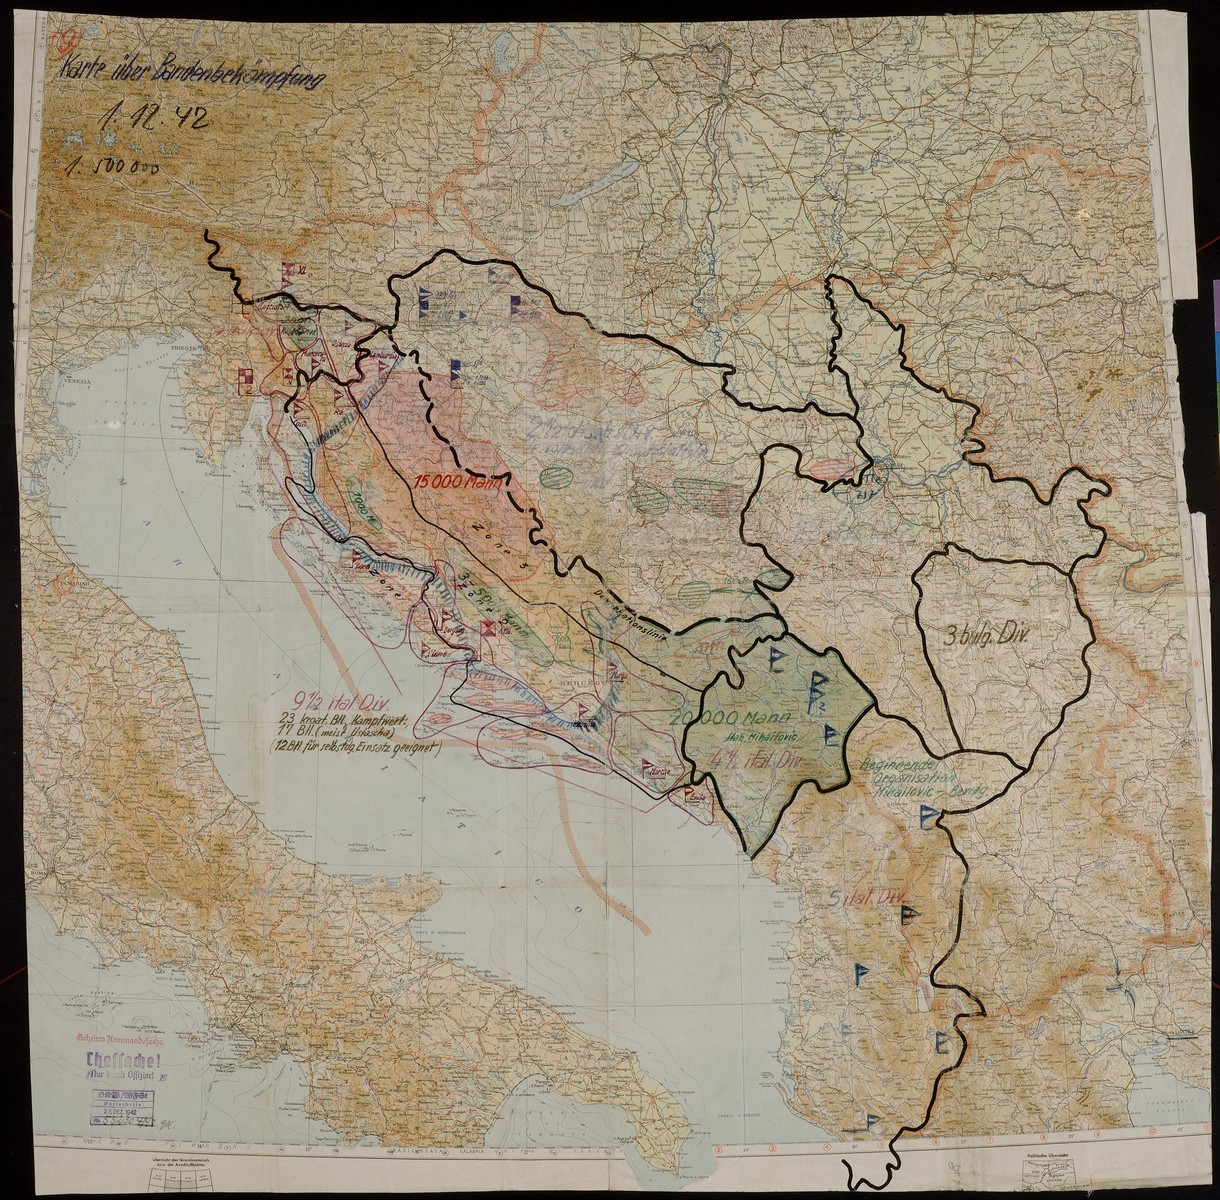 Karte uber Bandenbekampfung.  Concerns partisan activity in Yugoslavia, 1942 Dec. 1.